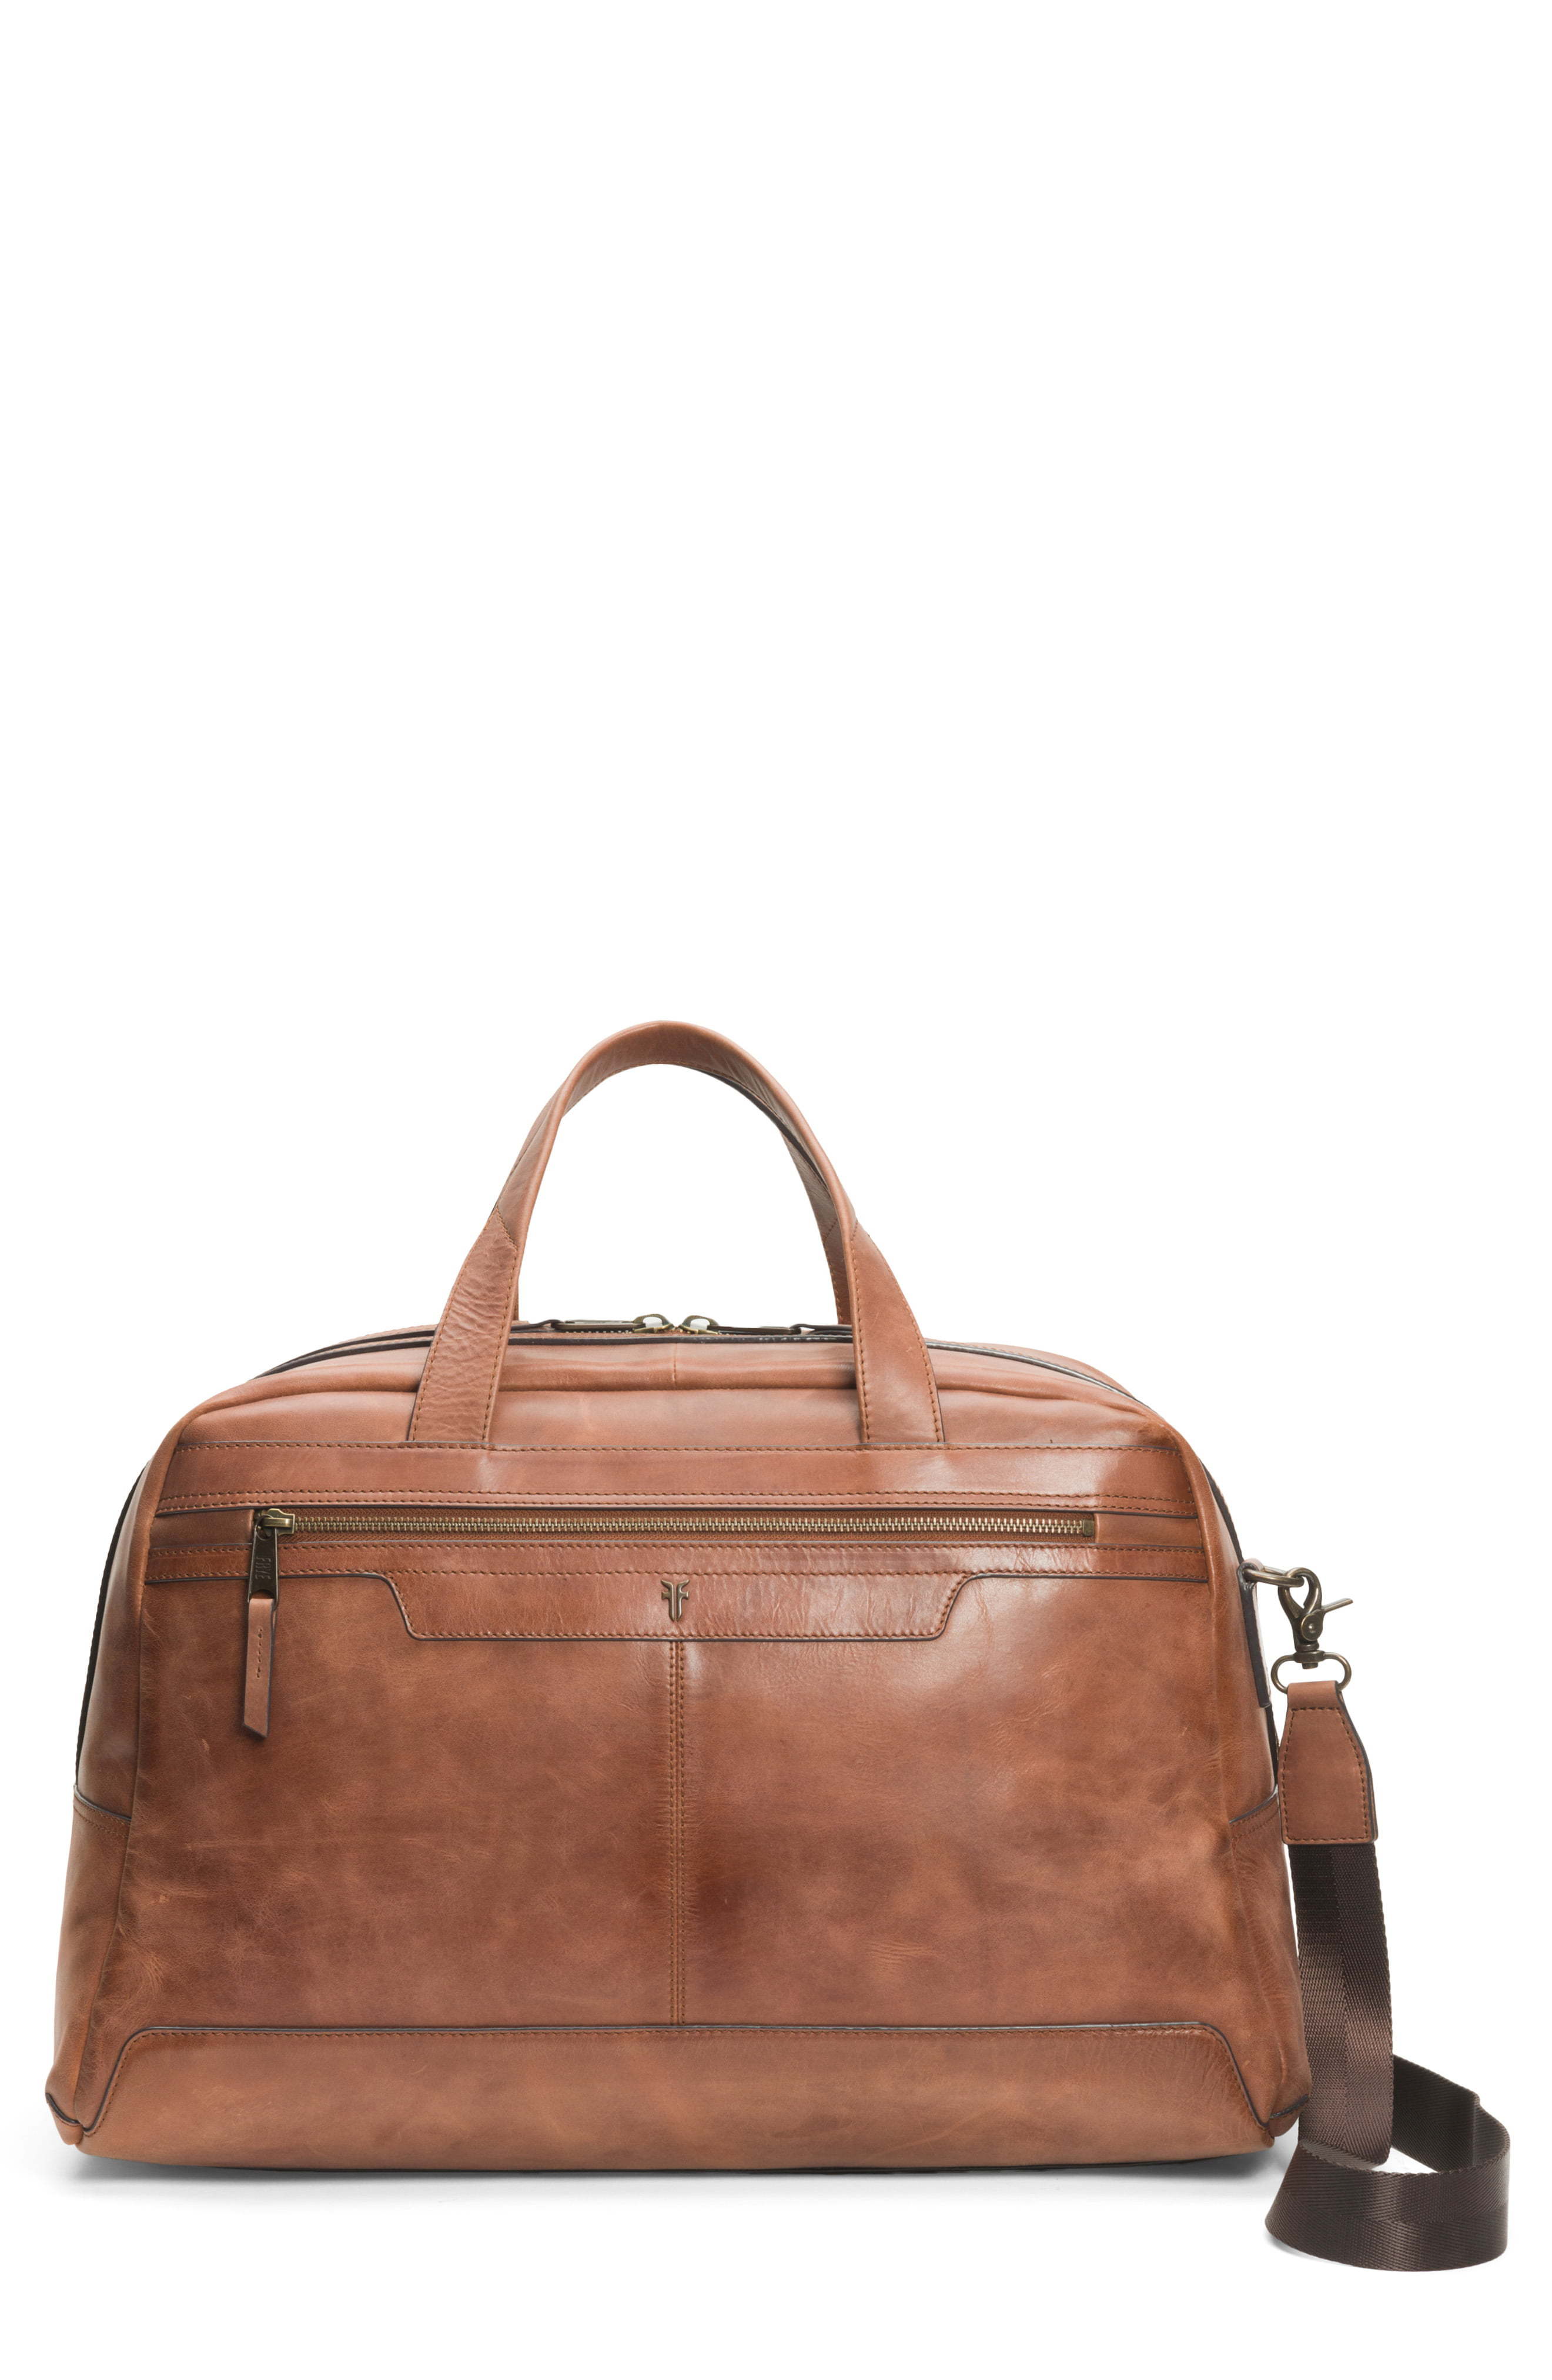 Frye Holden Leather Duffle Bag, $548 | Nordstrom | Lookastic